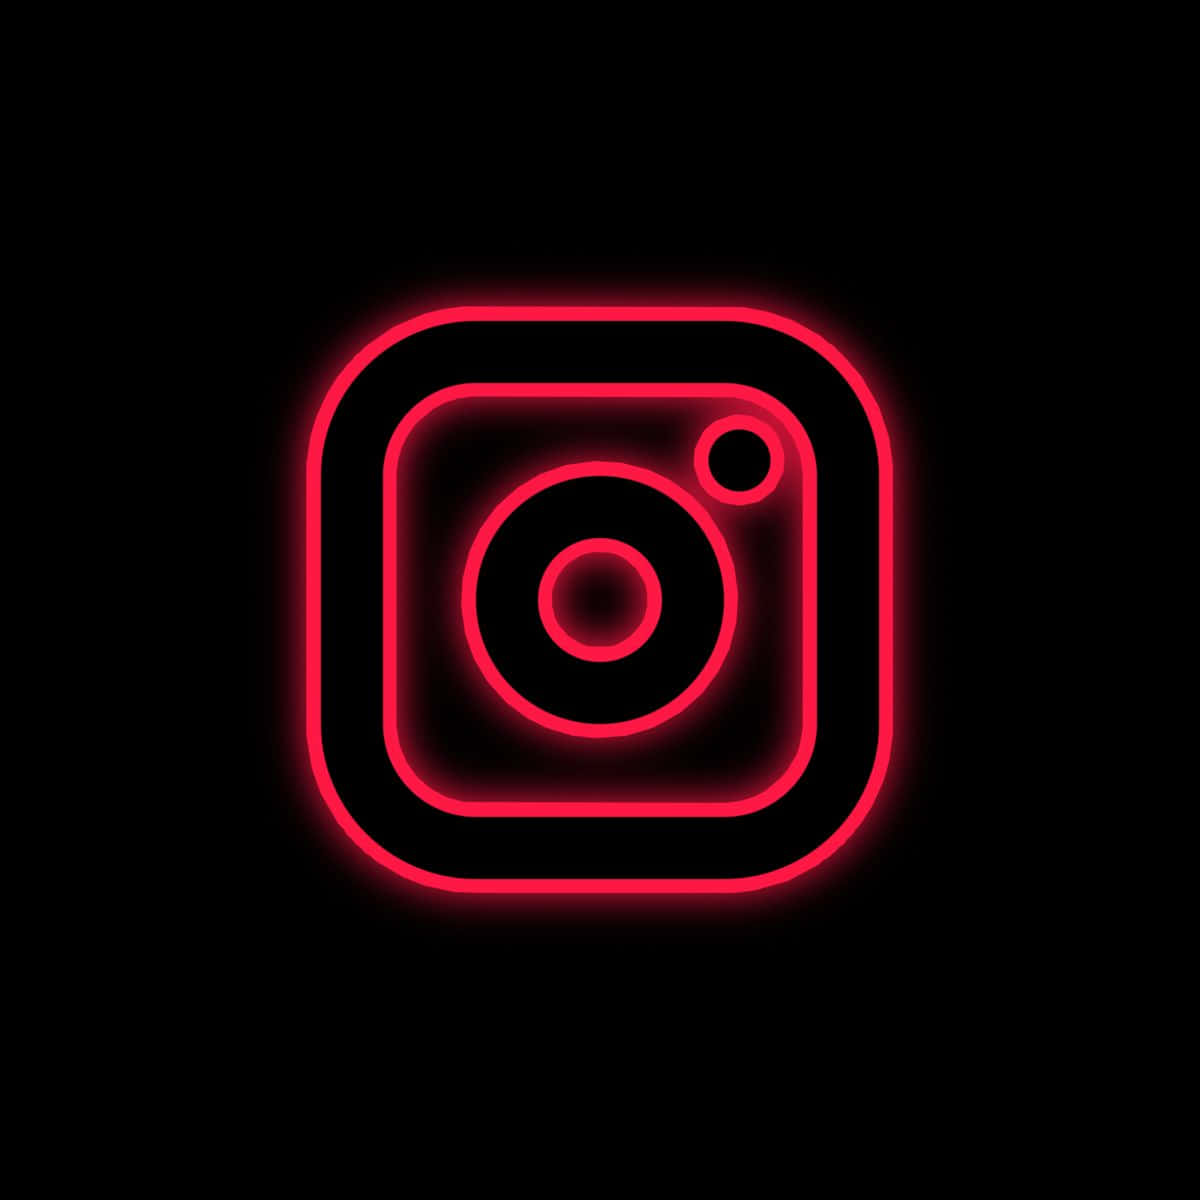 Logode Instagram En Rojo Neón Sobre Un Fondo Negro.